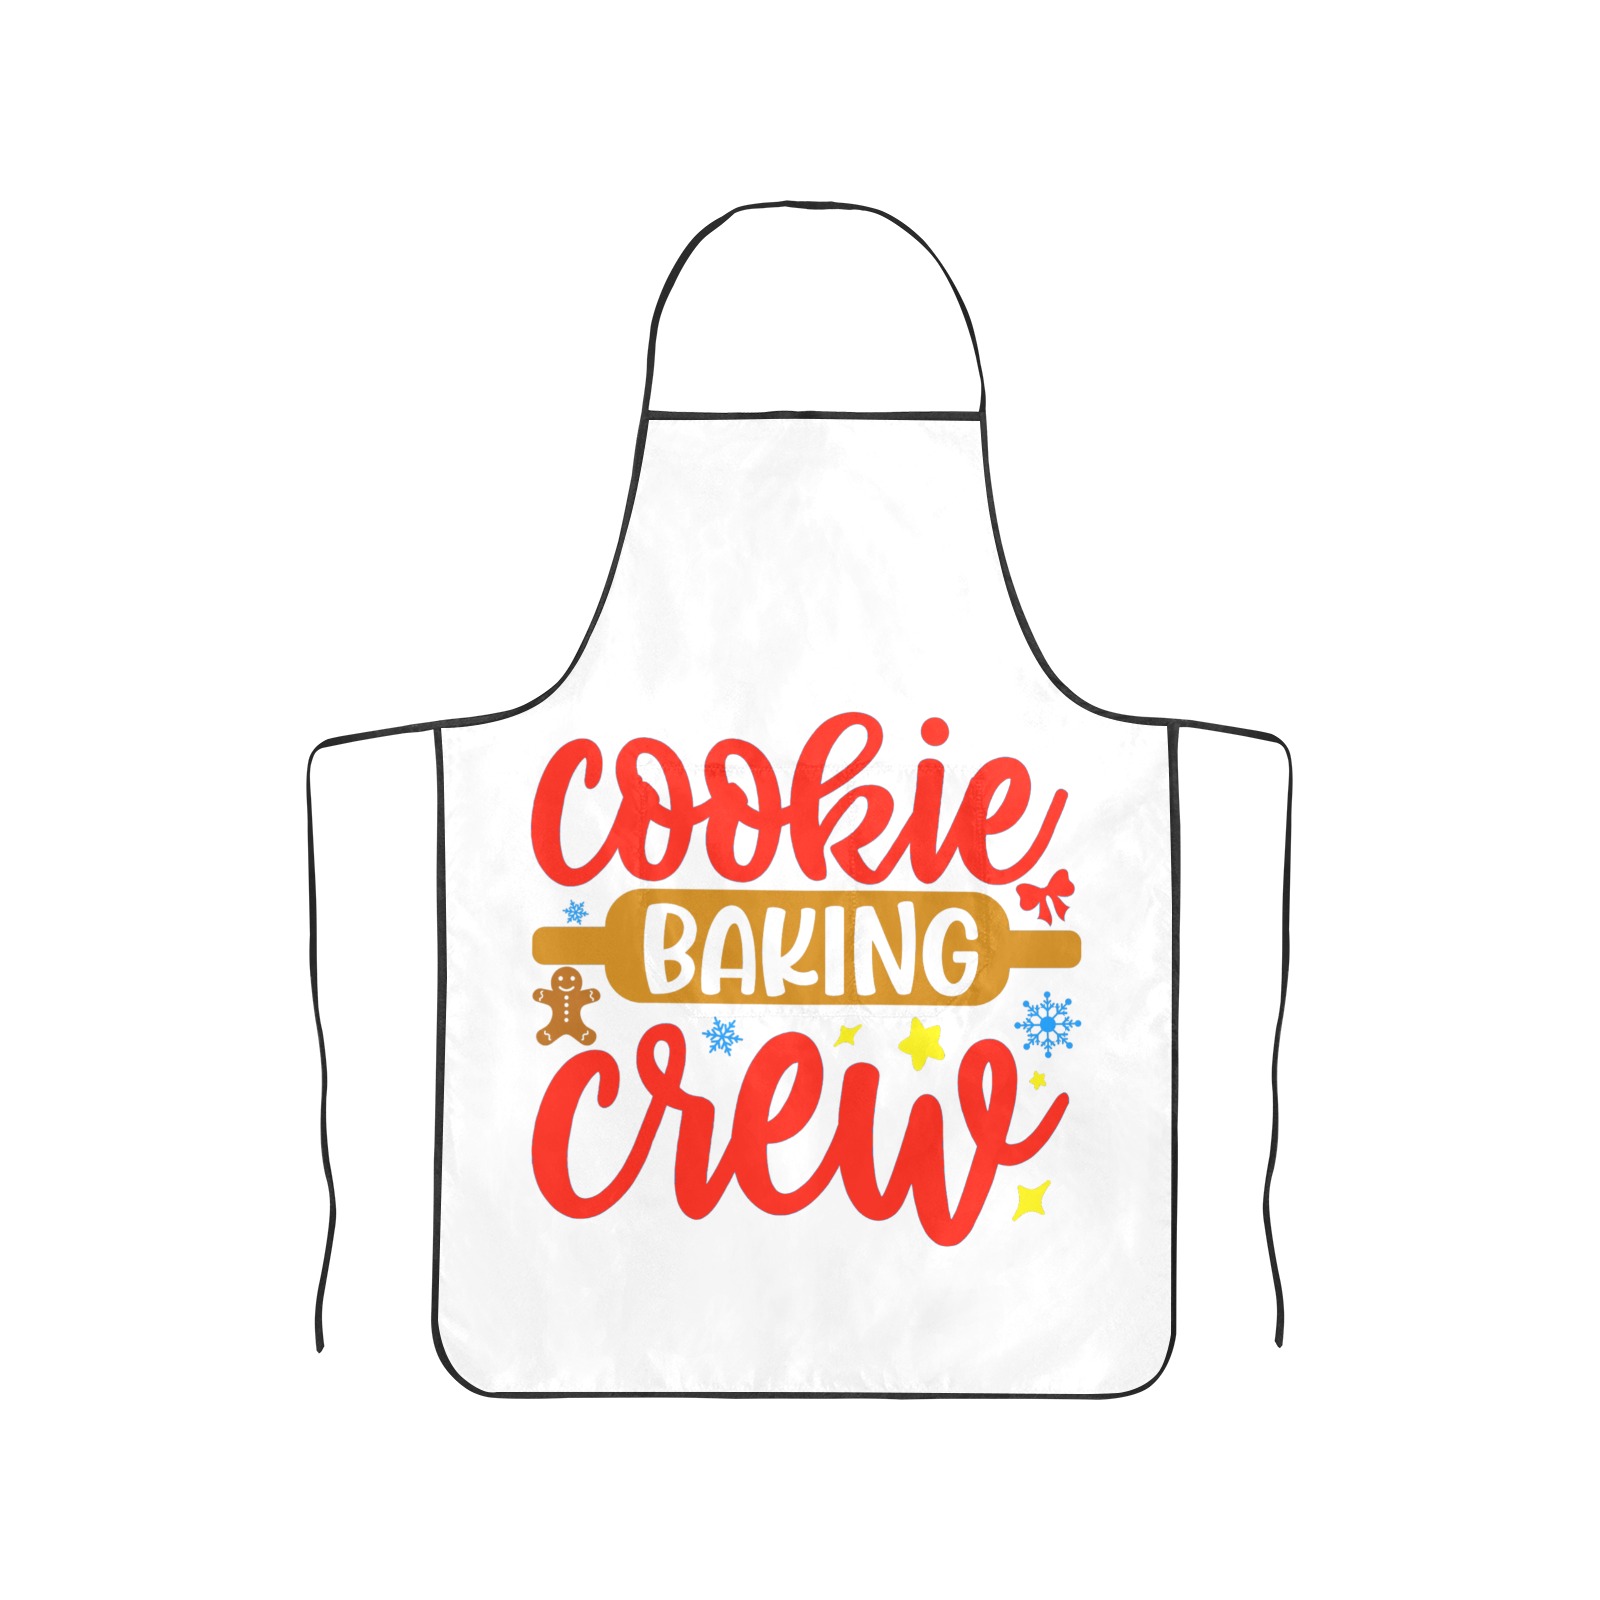 Cookie Baking Crew Women's Overlock Apron with Pocket